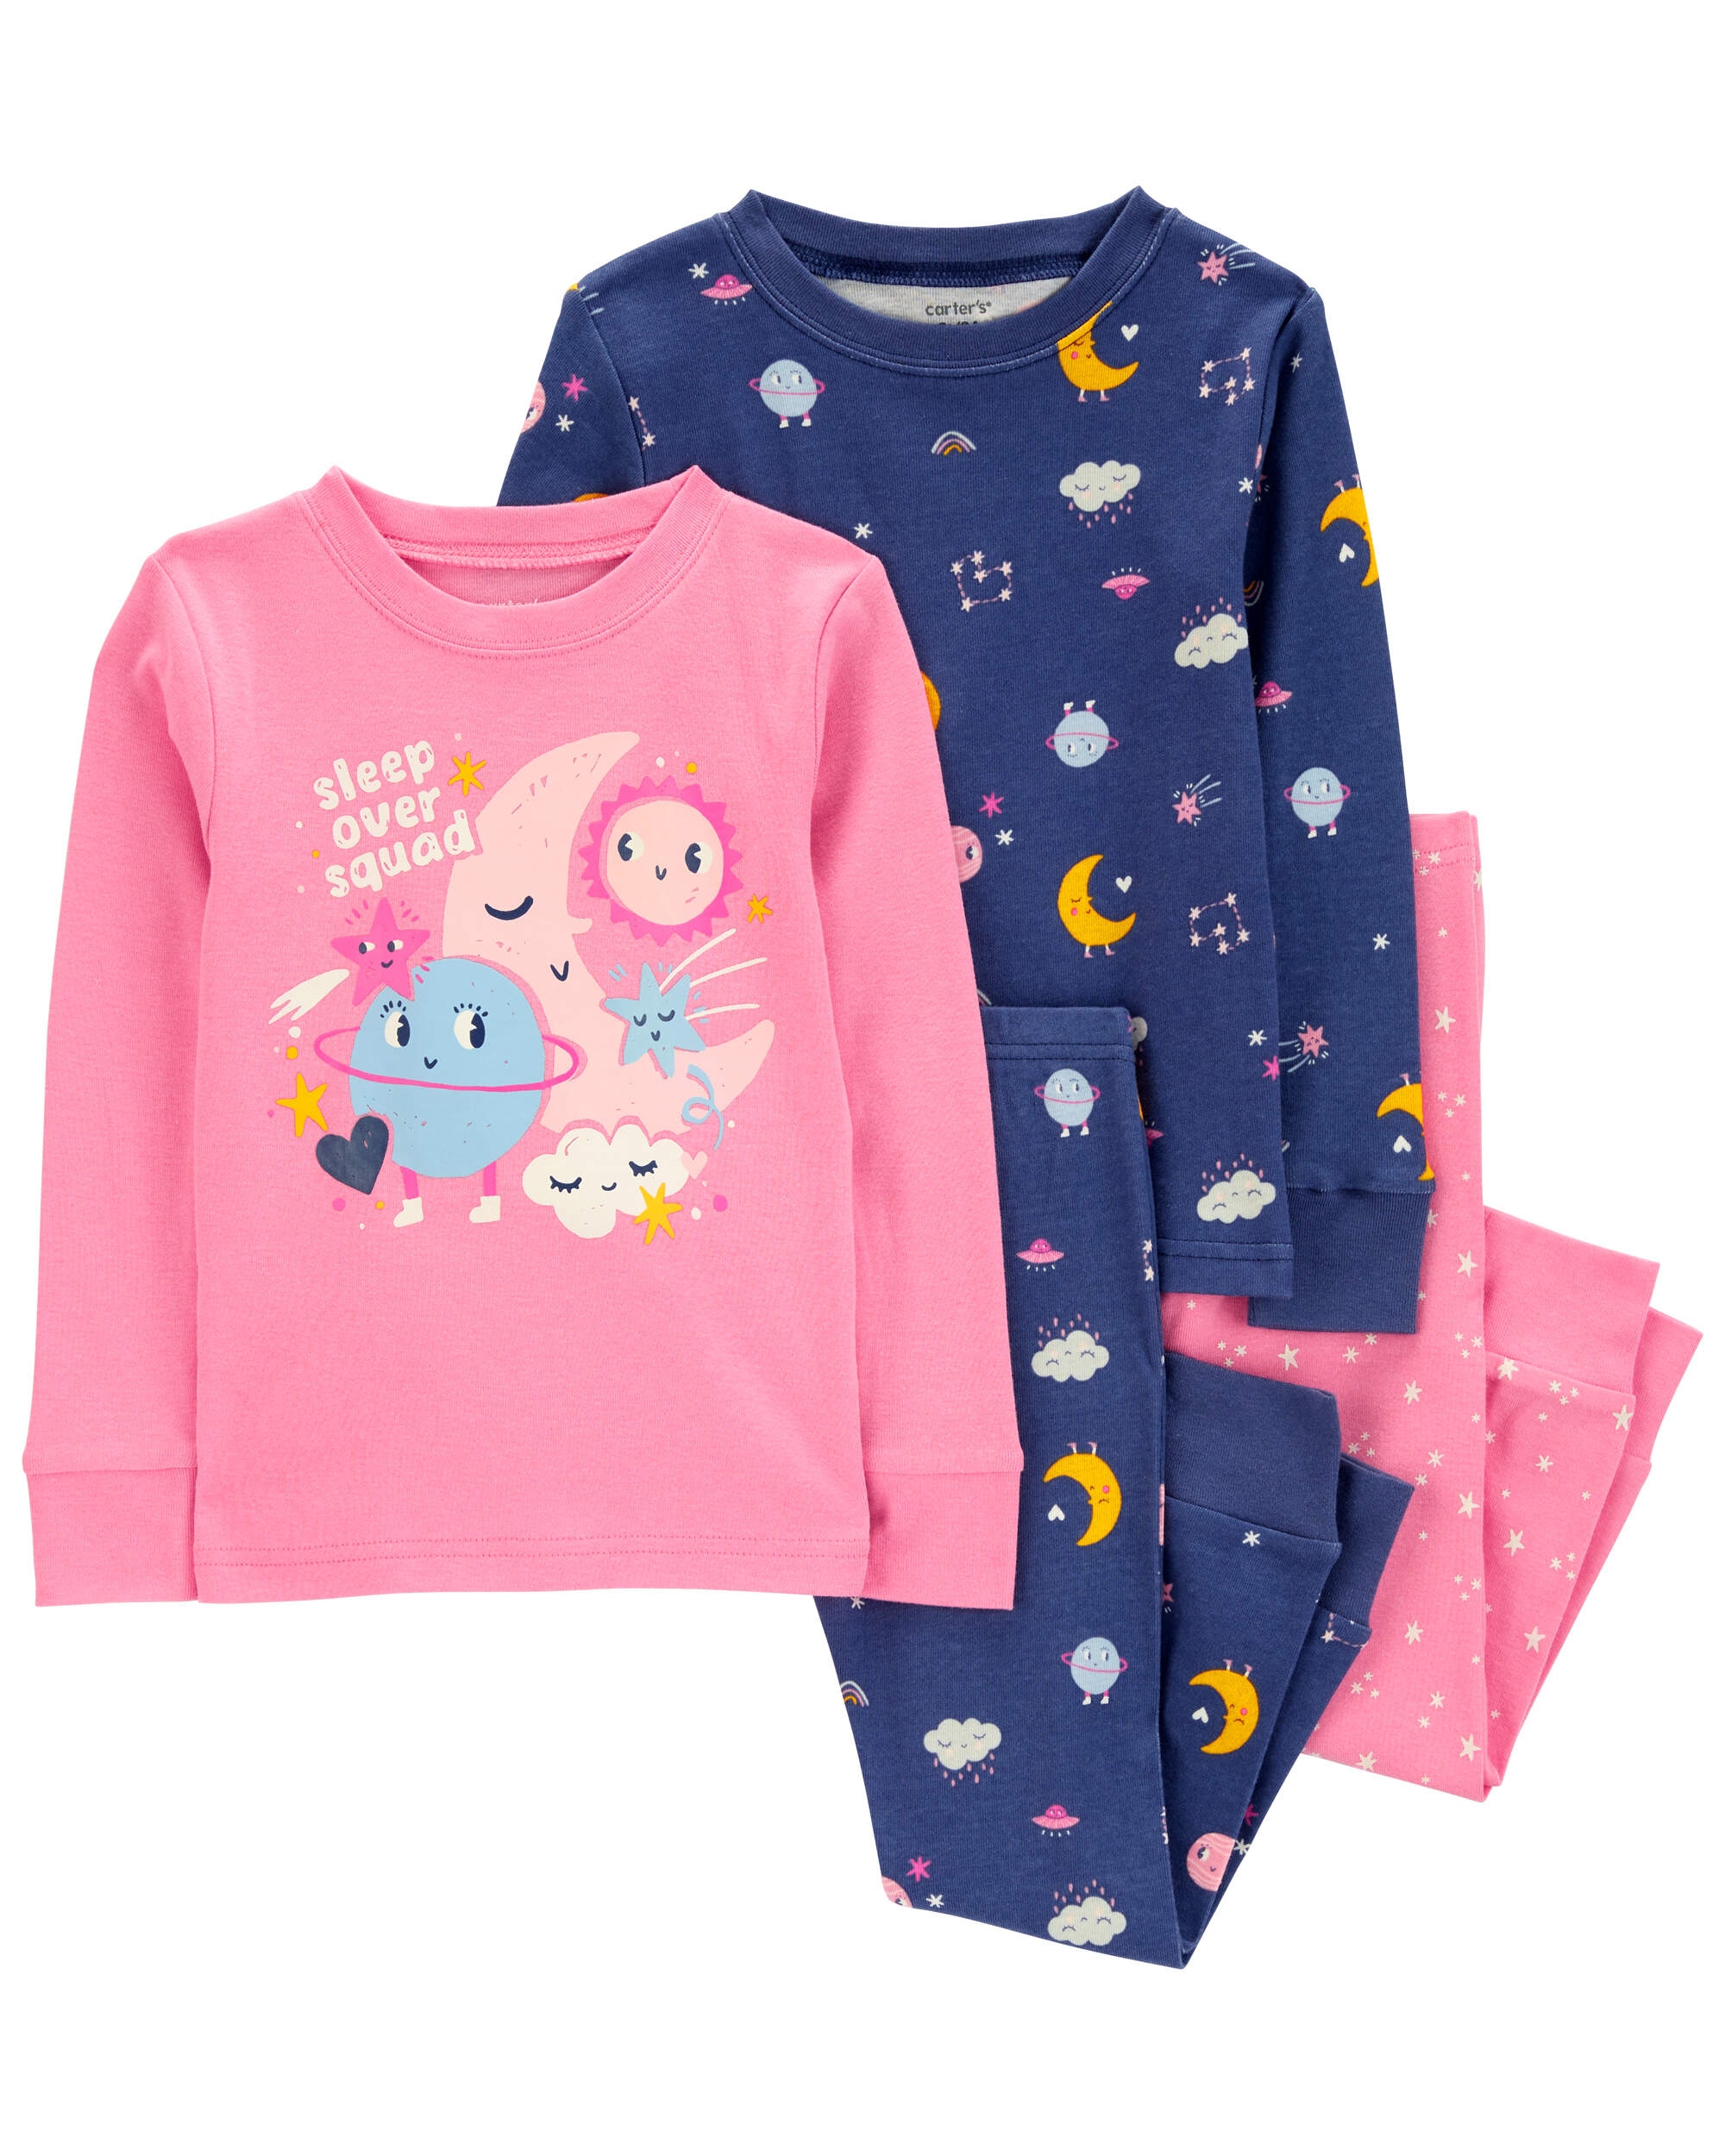 Toddler 4-Piece Space Print 100% Snug Fit Cotton Pyjamas